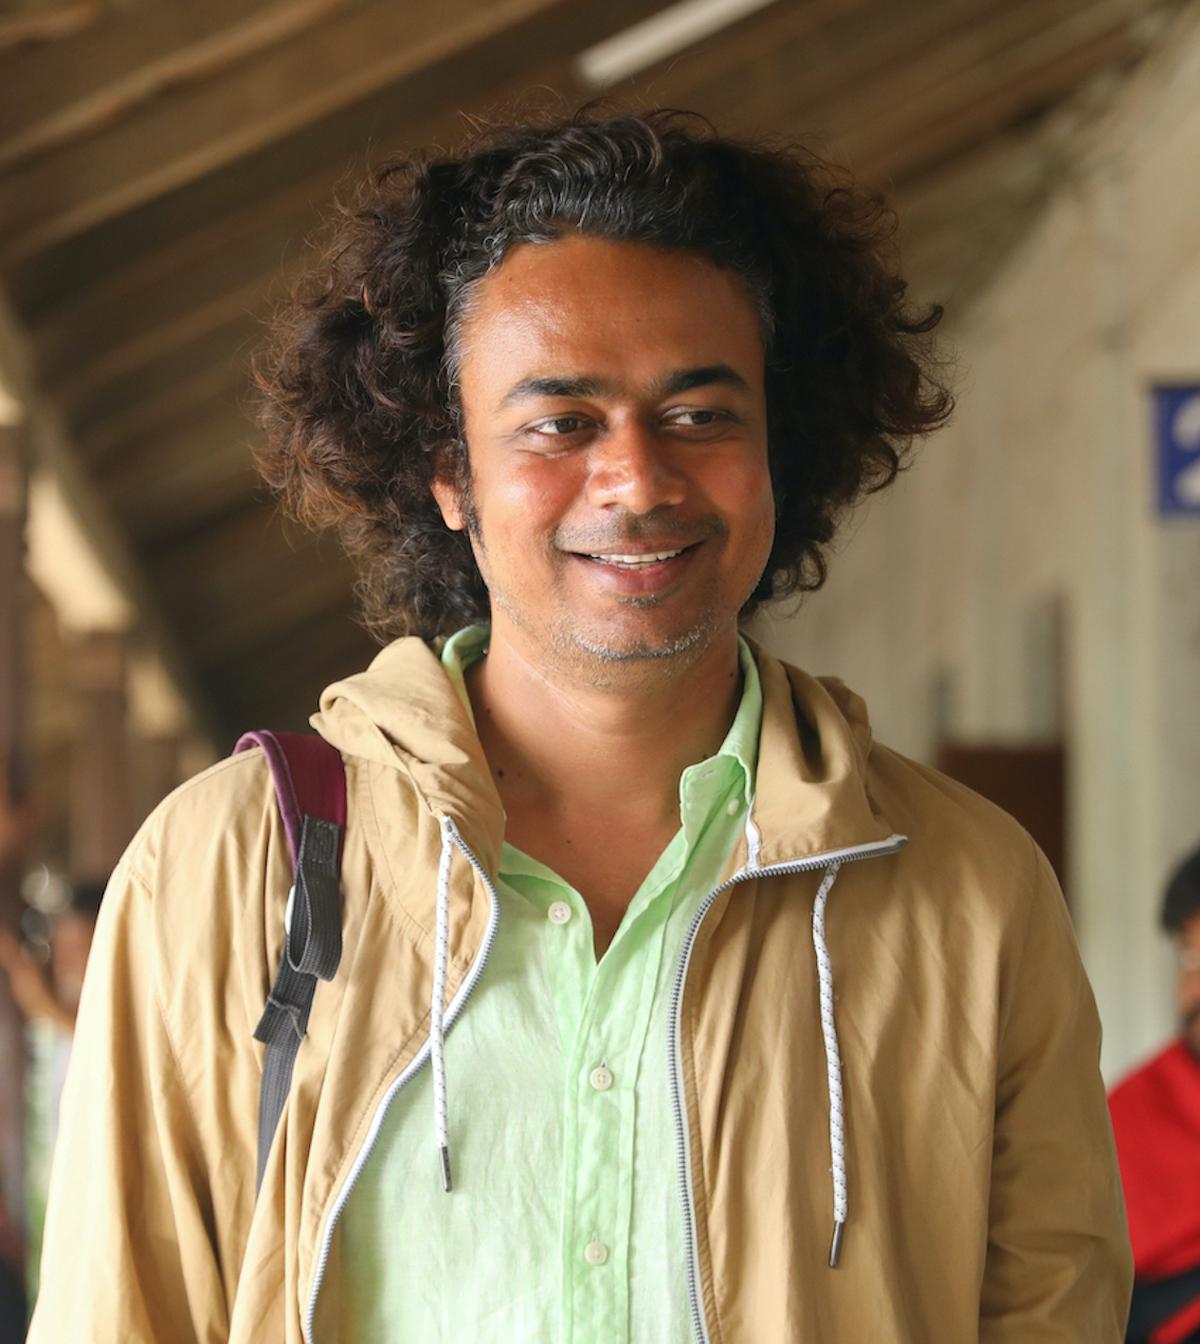 Director of Sthal, Jayant Somalkar